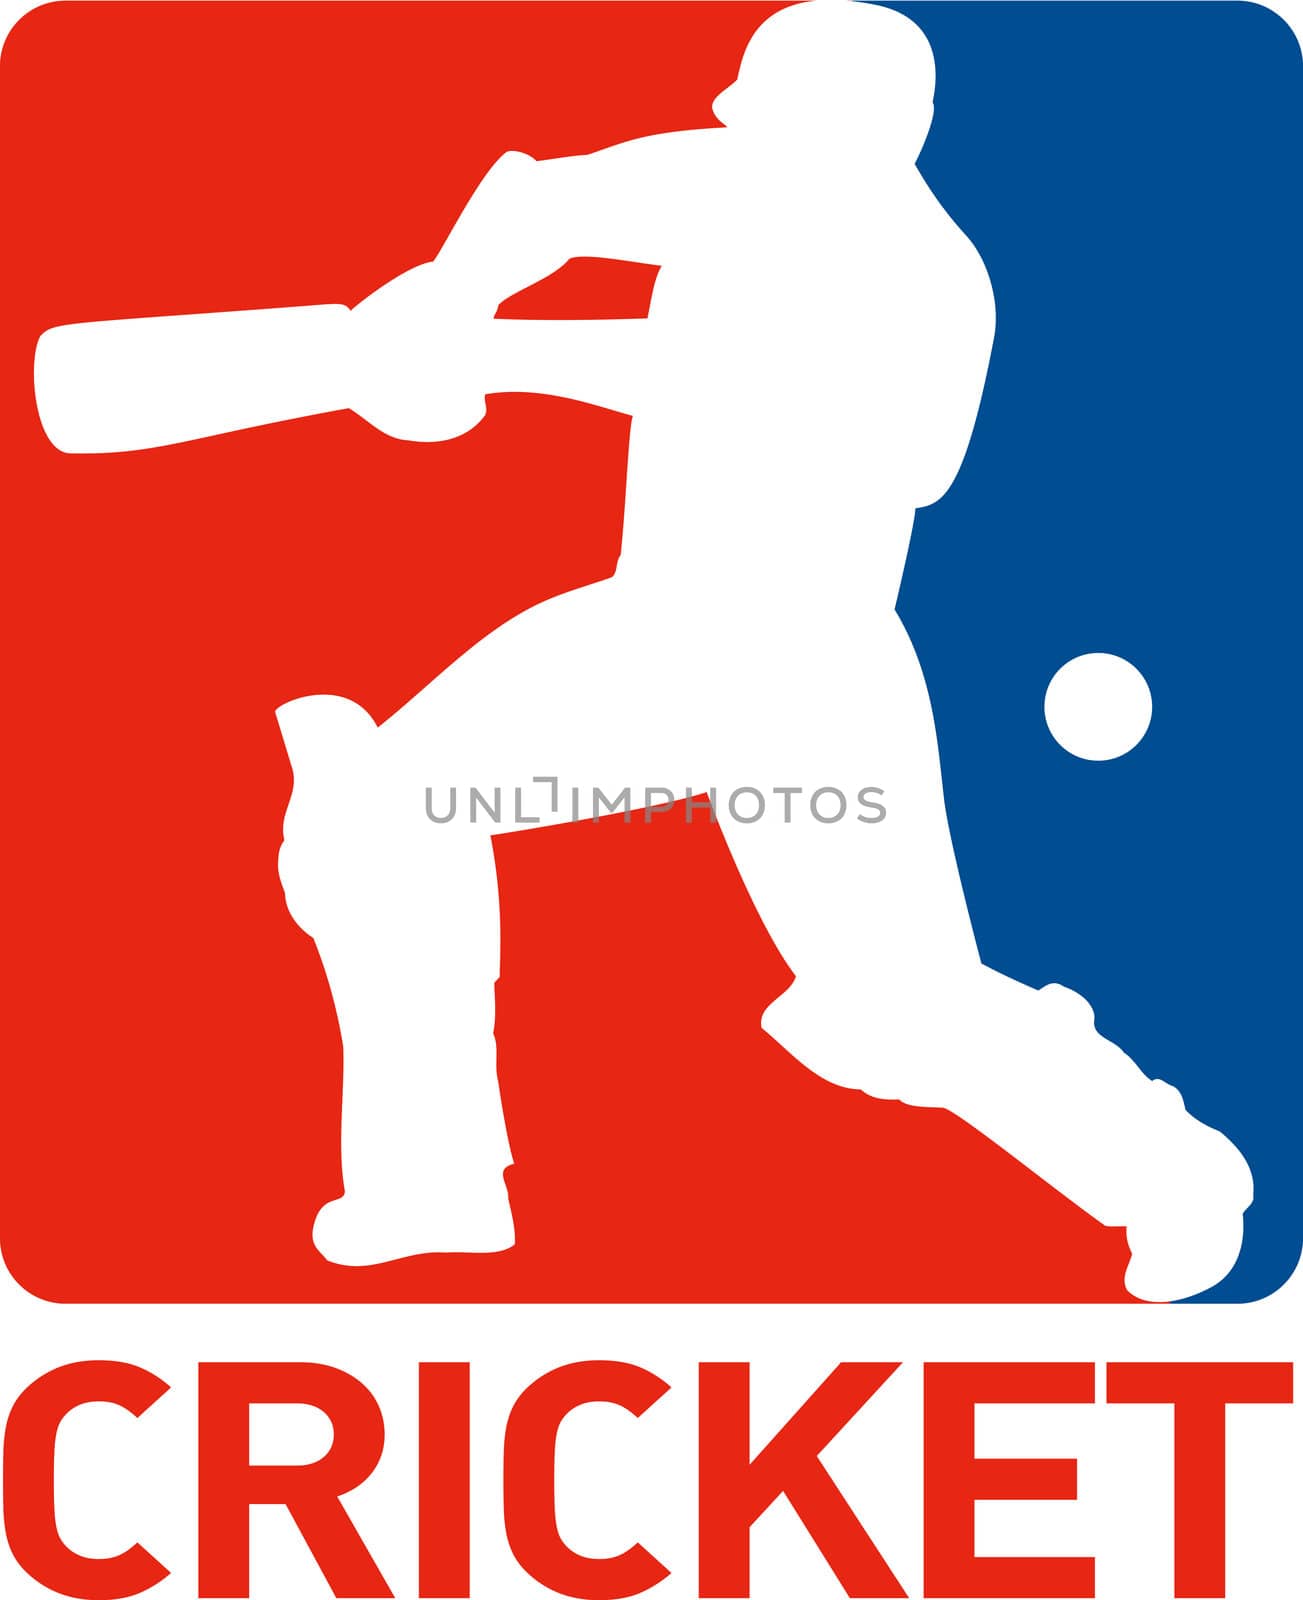 cricket player batsman batting by patrimonio